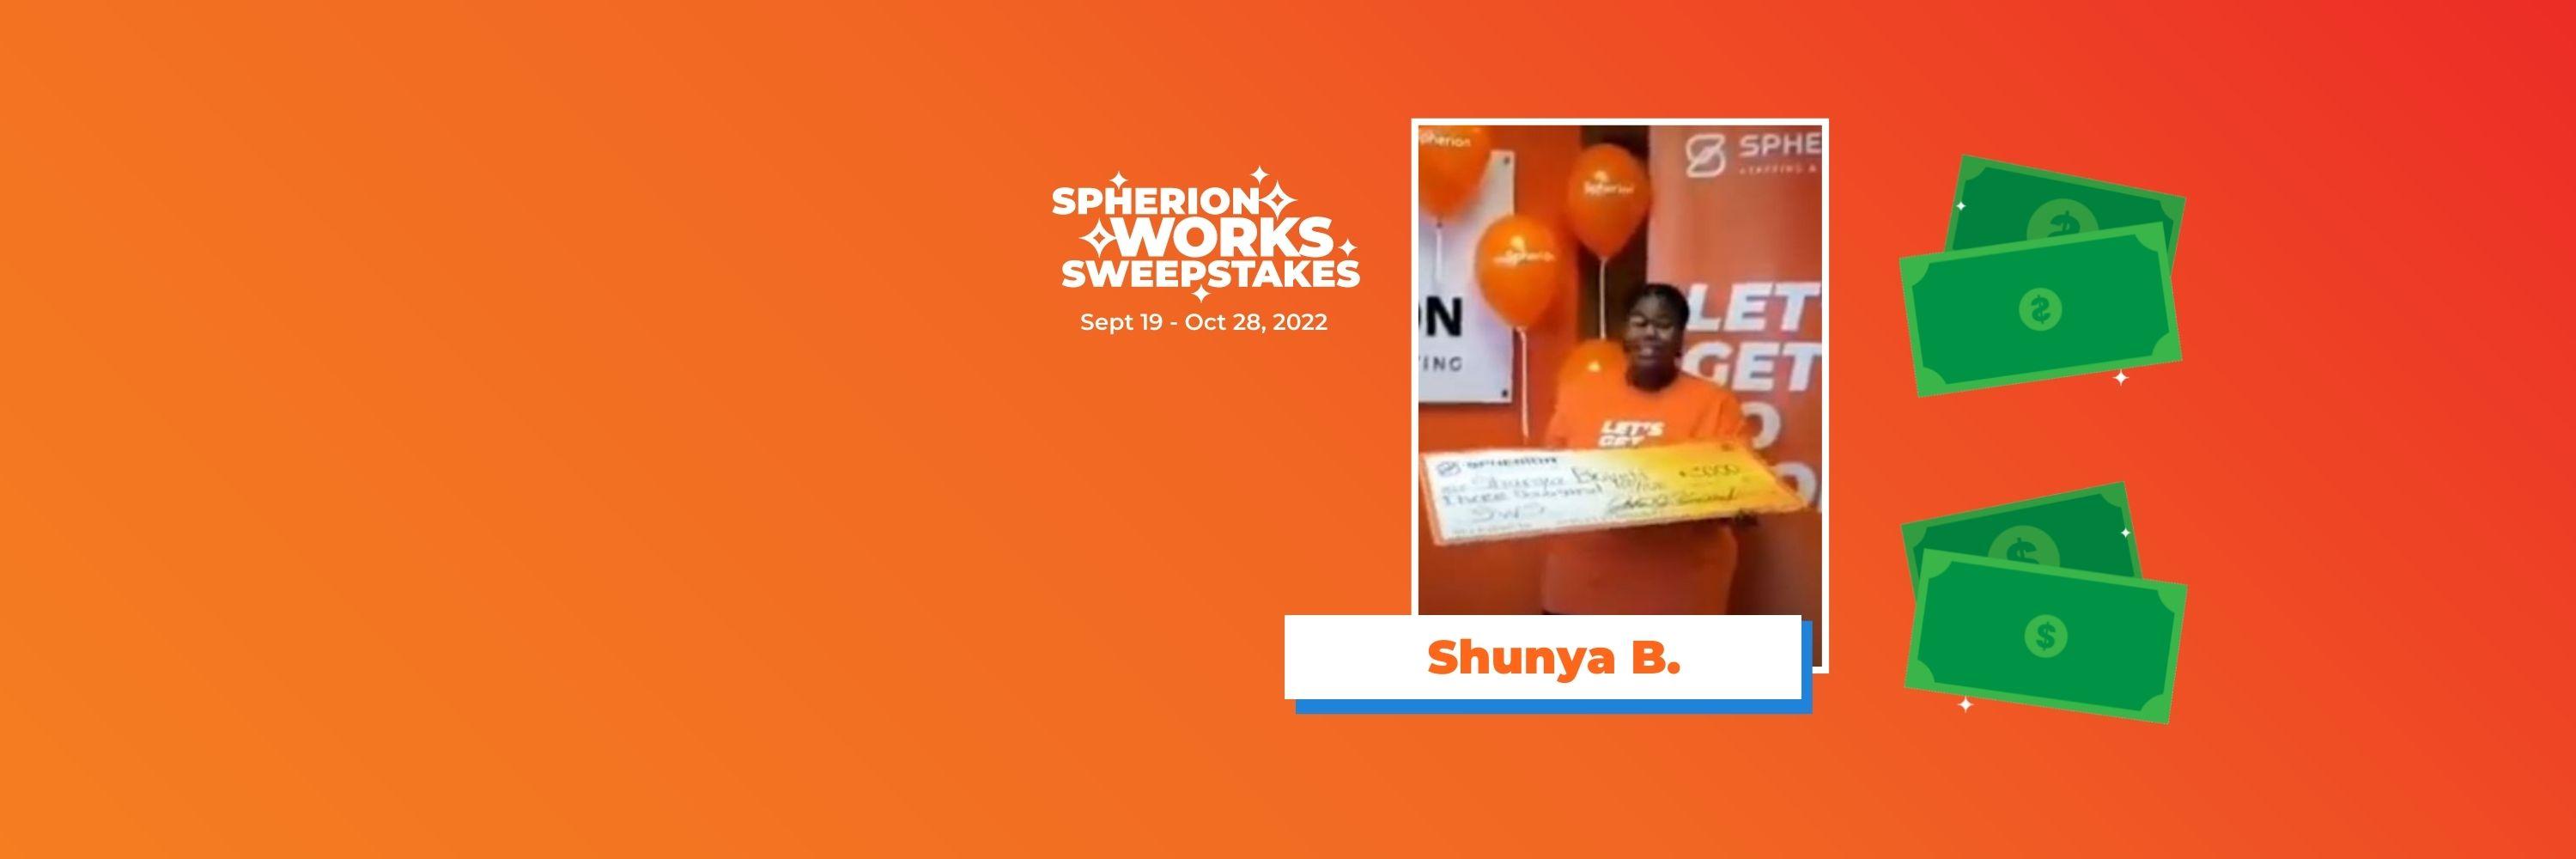 Shunya B. of Freeport Illinois poses with her prize money check